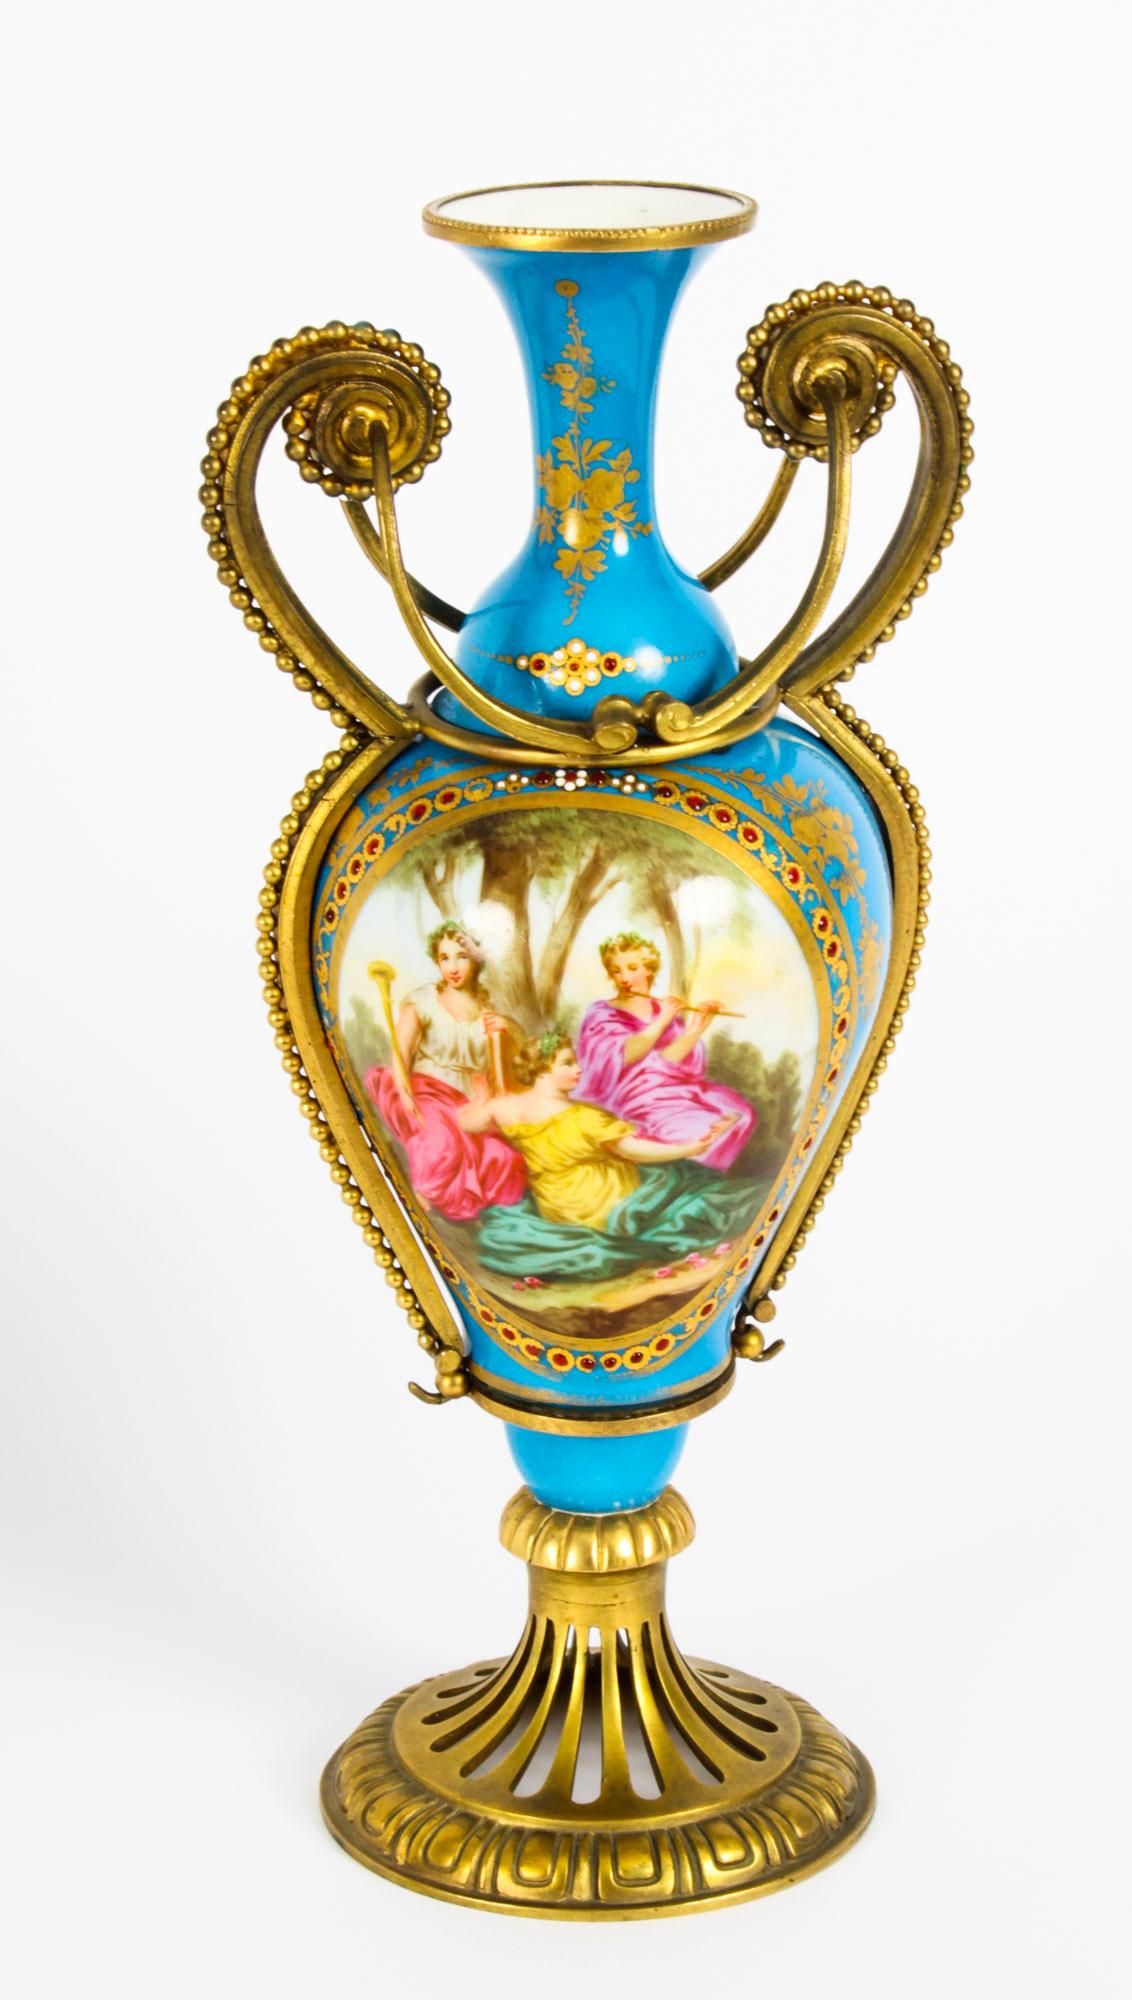 Antique Pair of French Ormolu Mounted Bleu Celeste Sèvres Vases, 19th Century For Sale 9